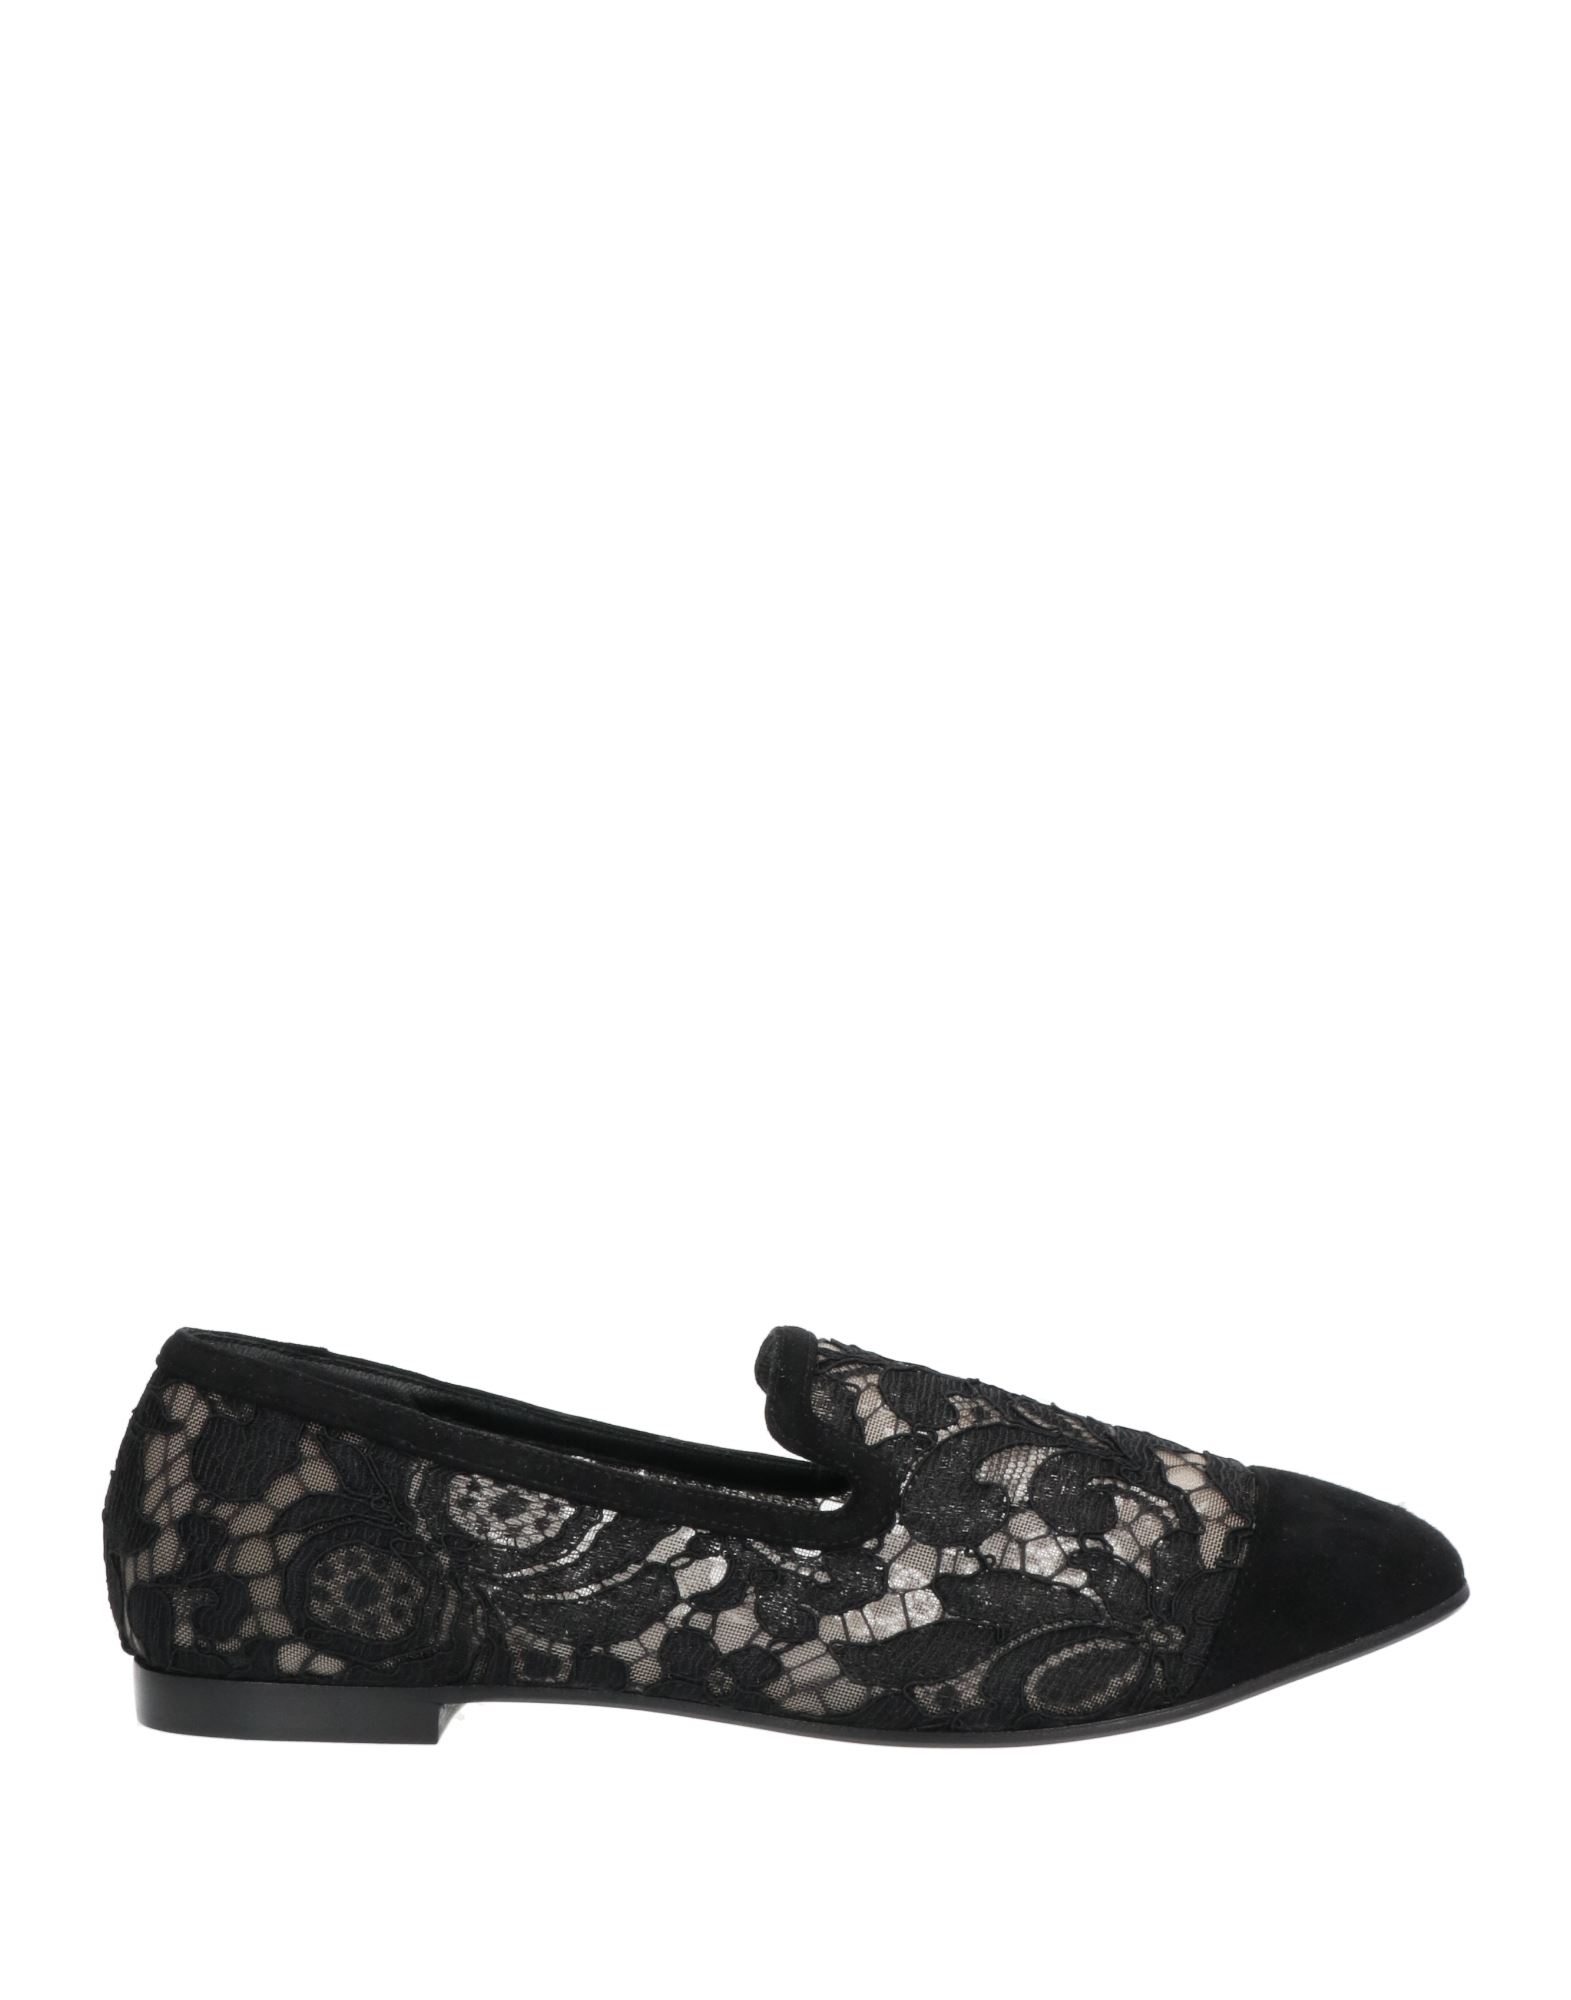 Dolce & Gabbana Loafers In Black